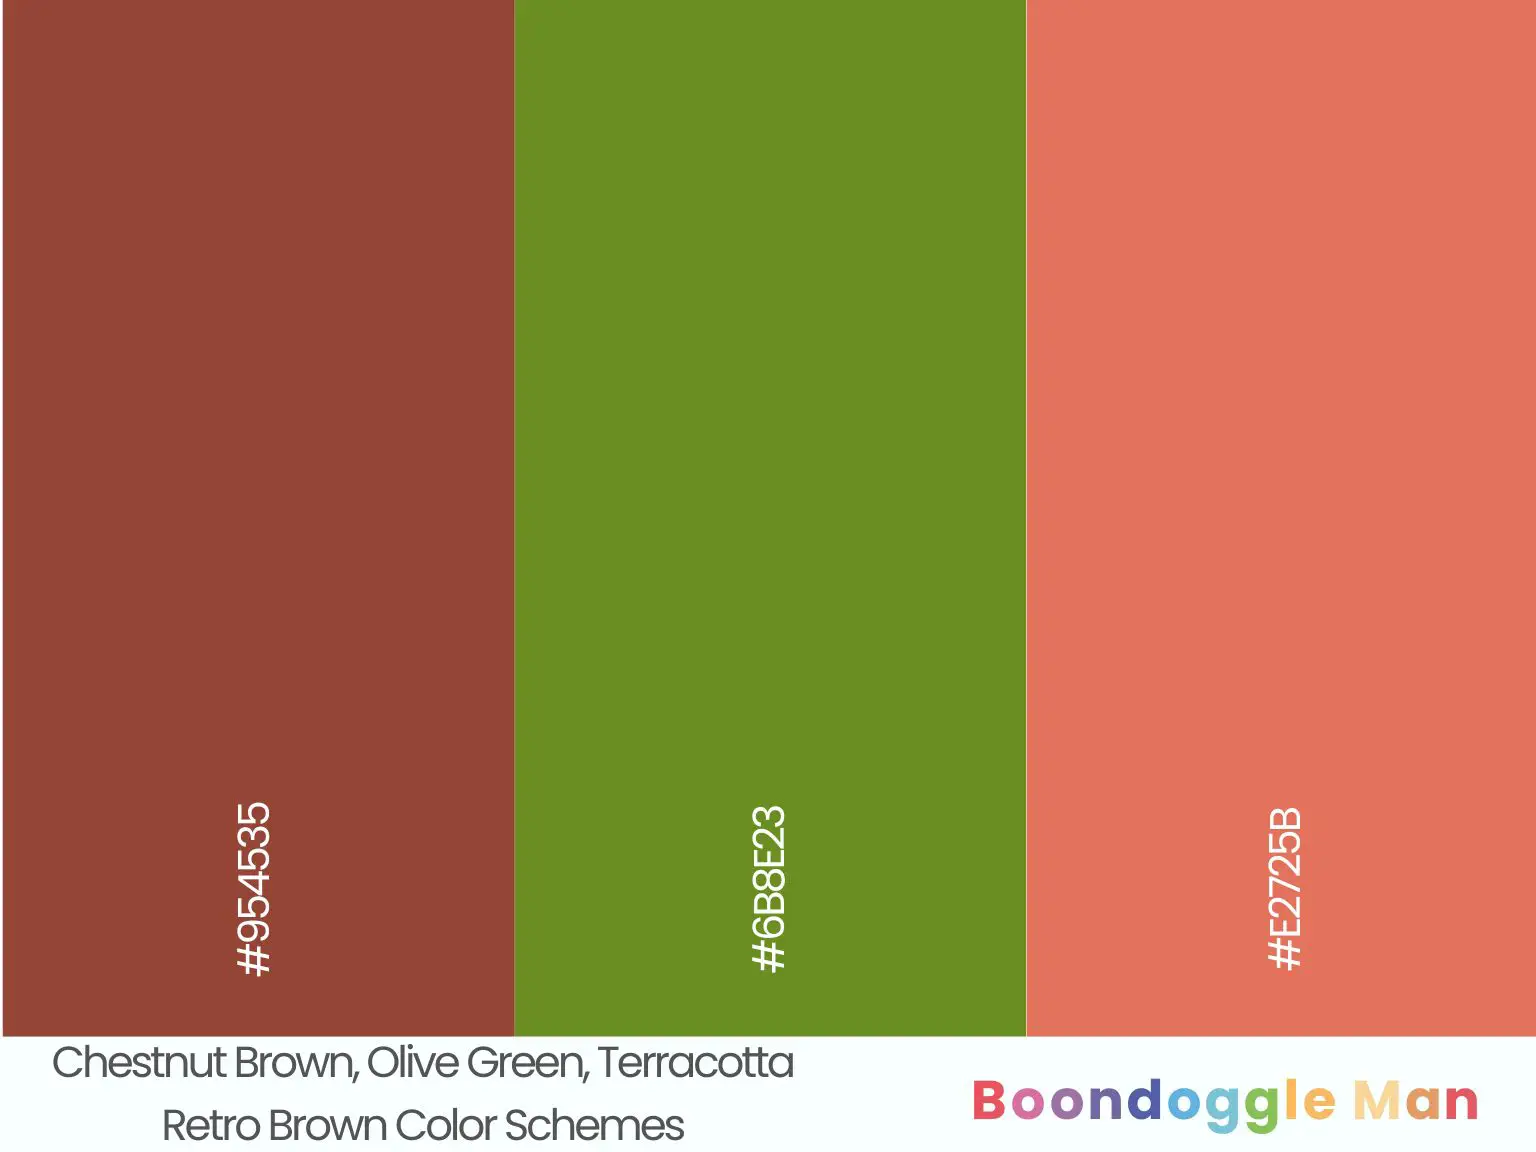 Chestnut Brown, Olive Green, Terracotta